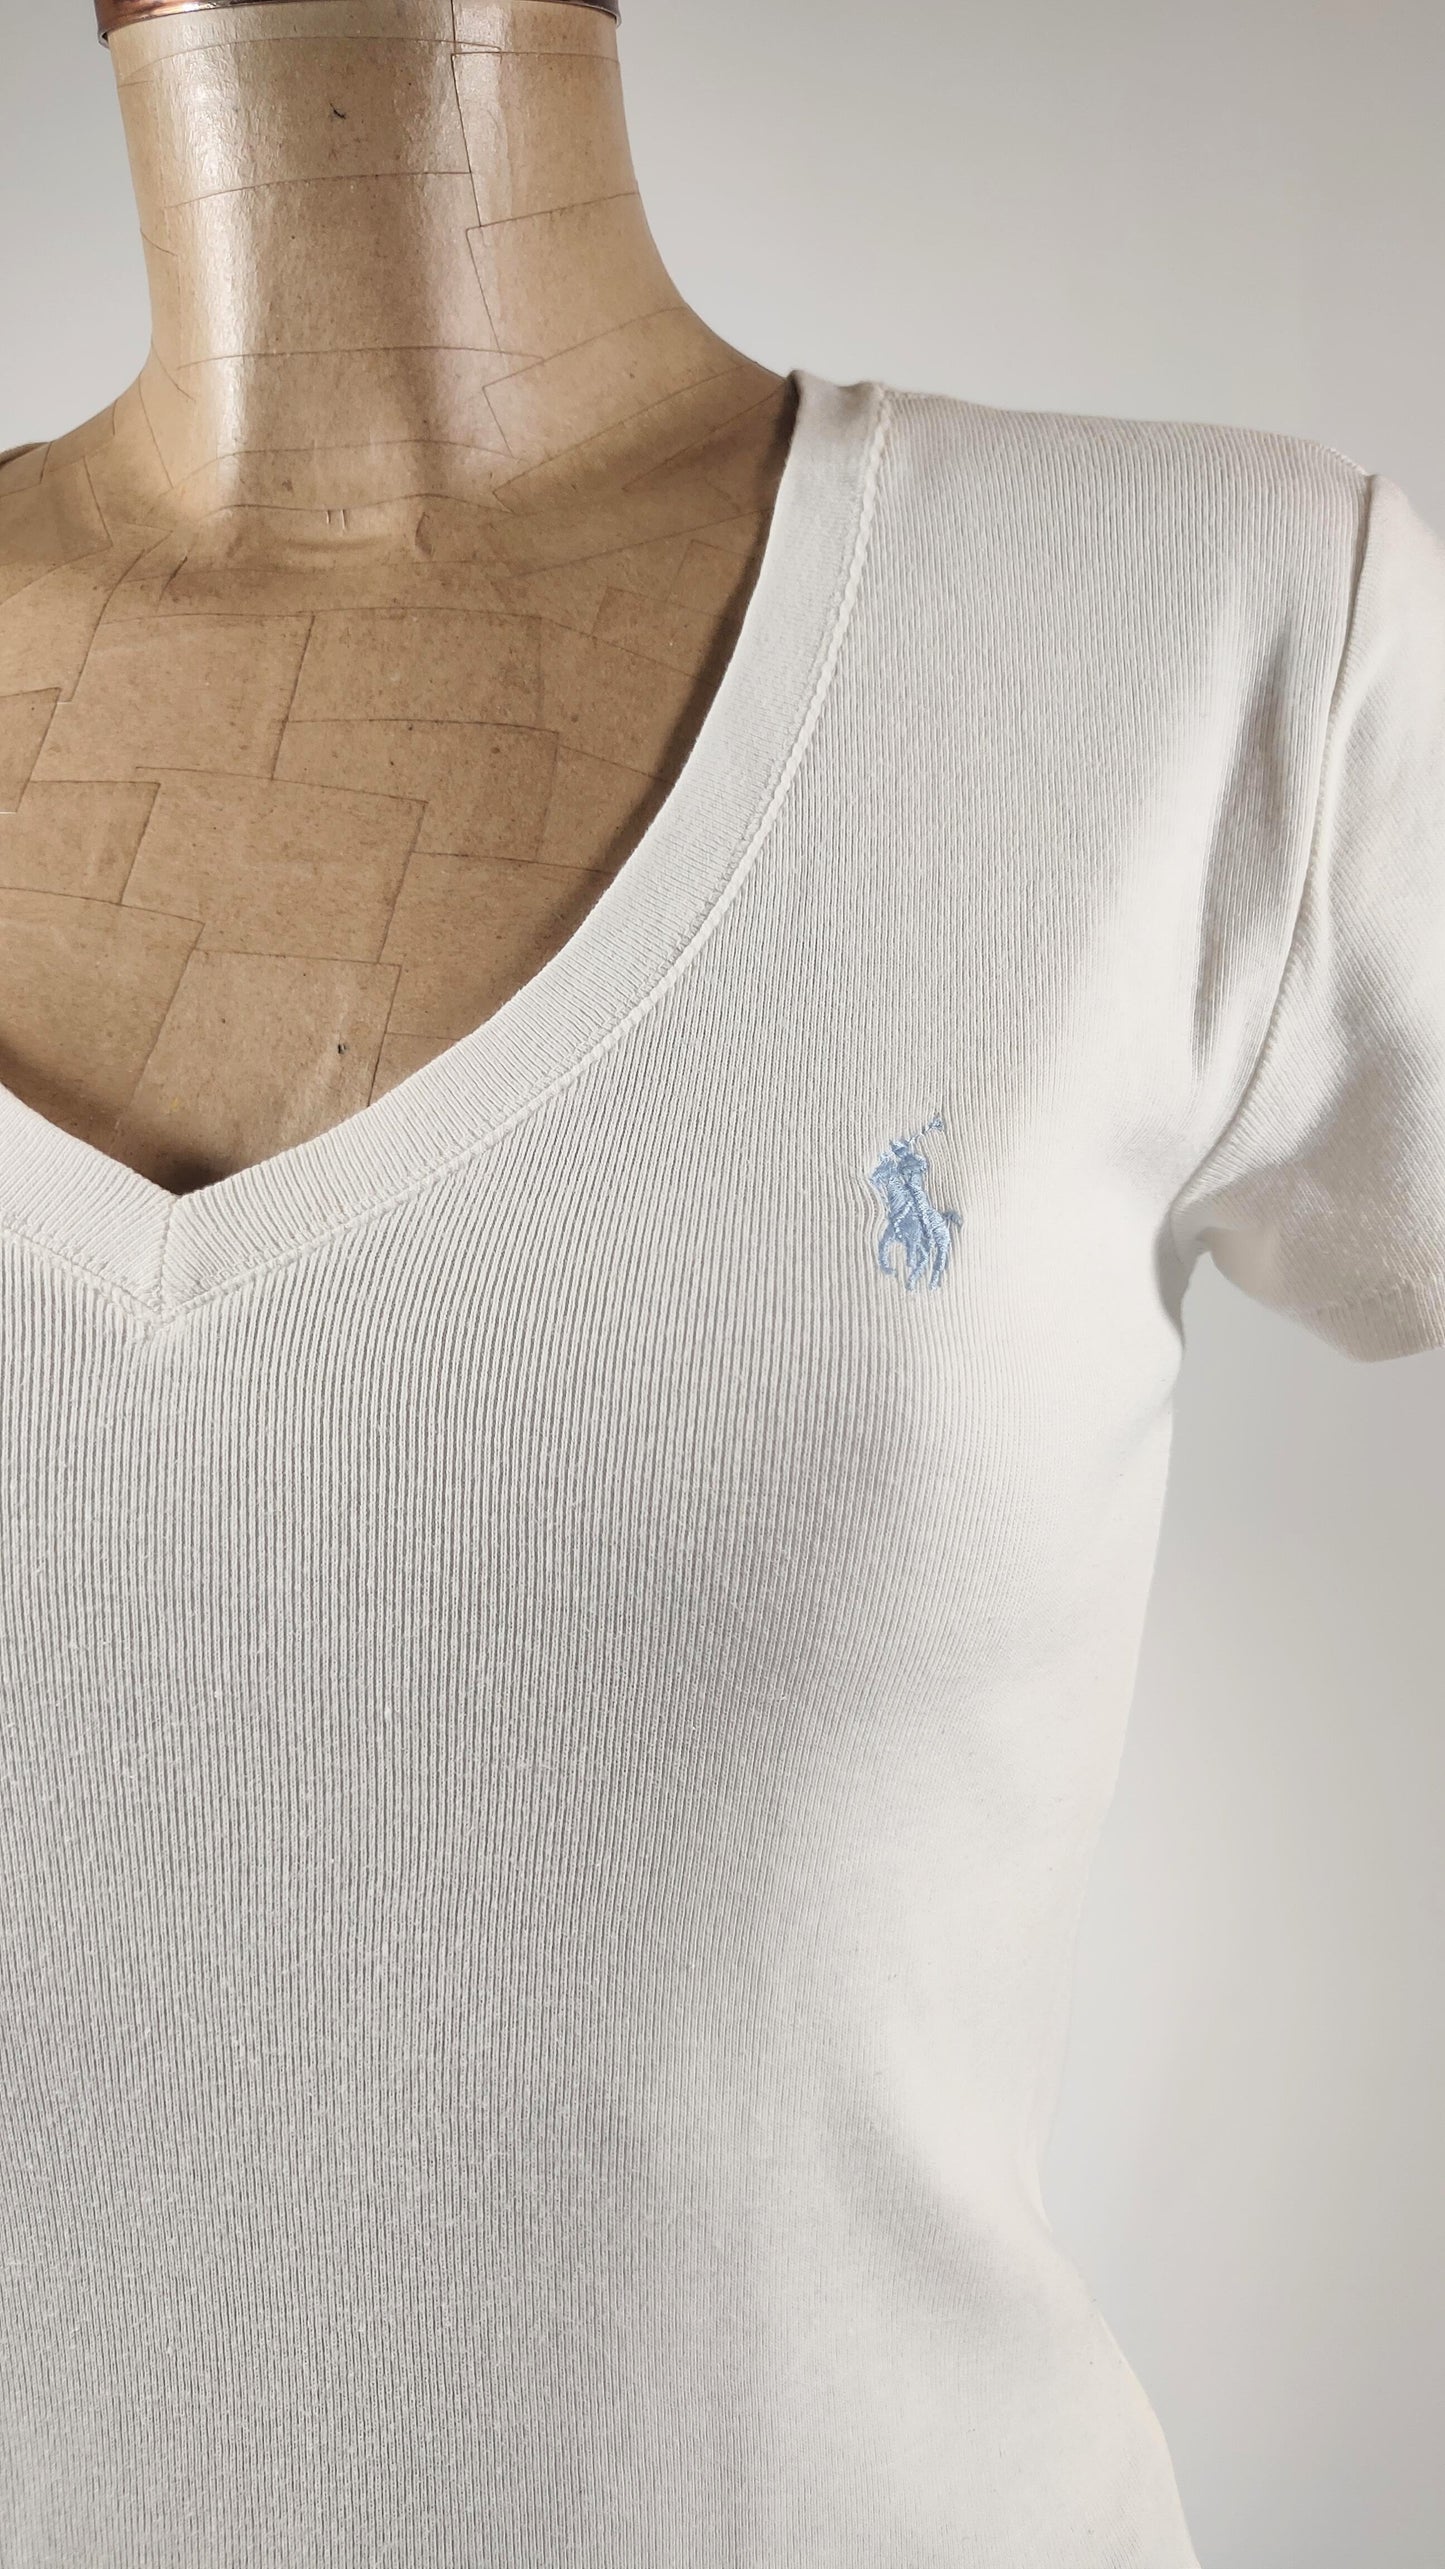 Camiseta Ralph Lauren de pico blanca